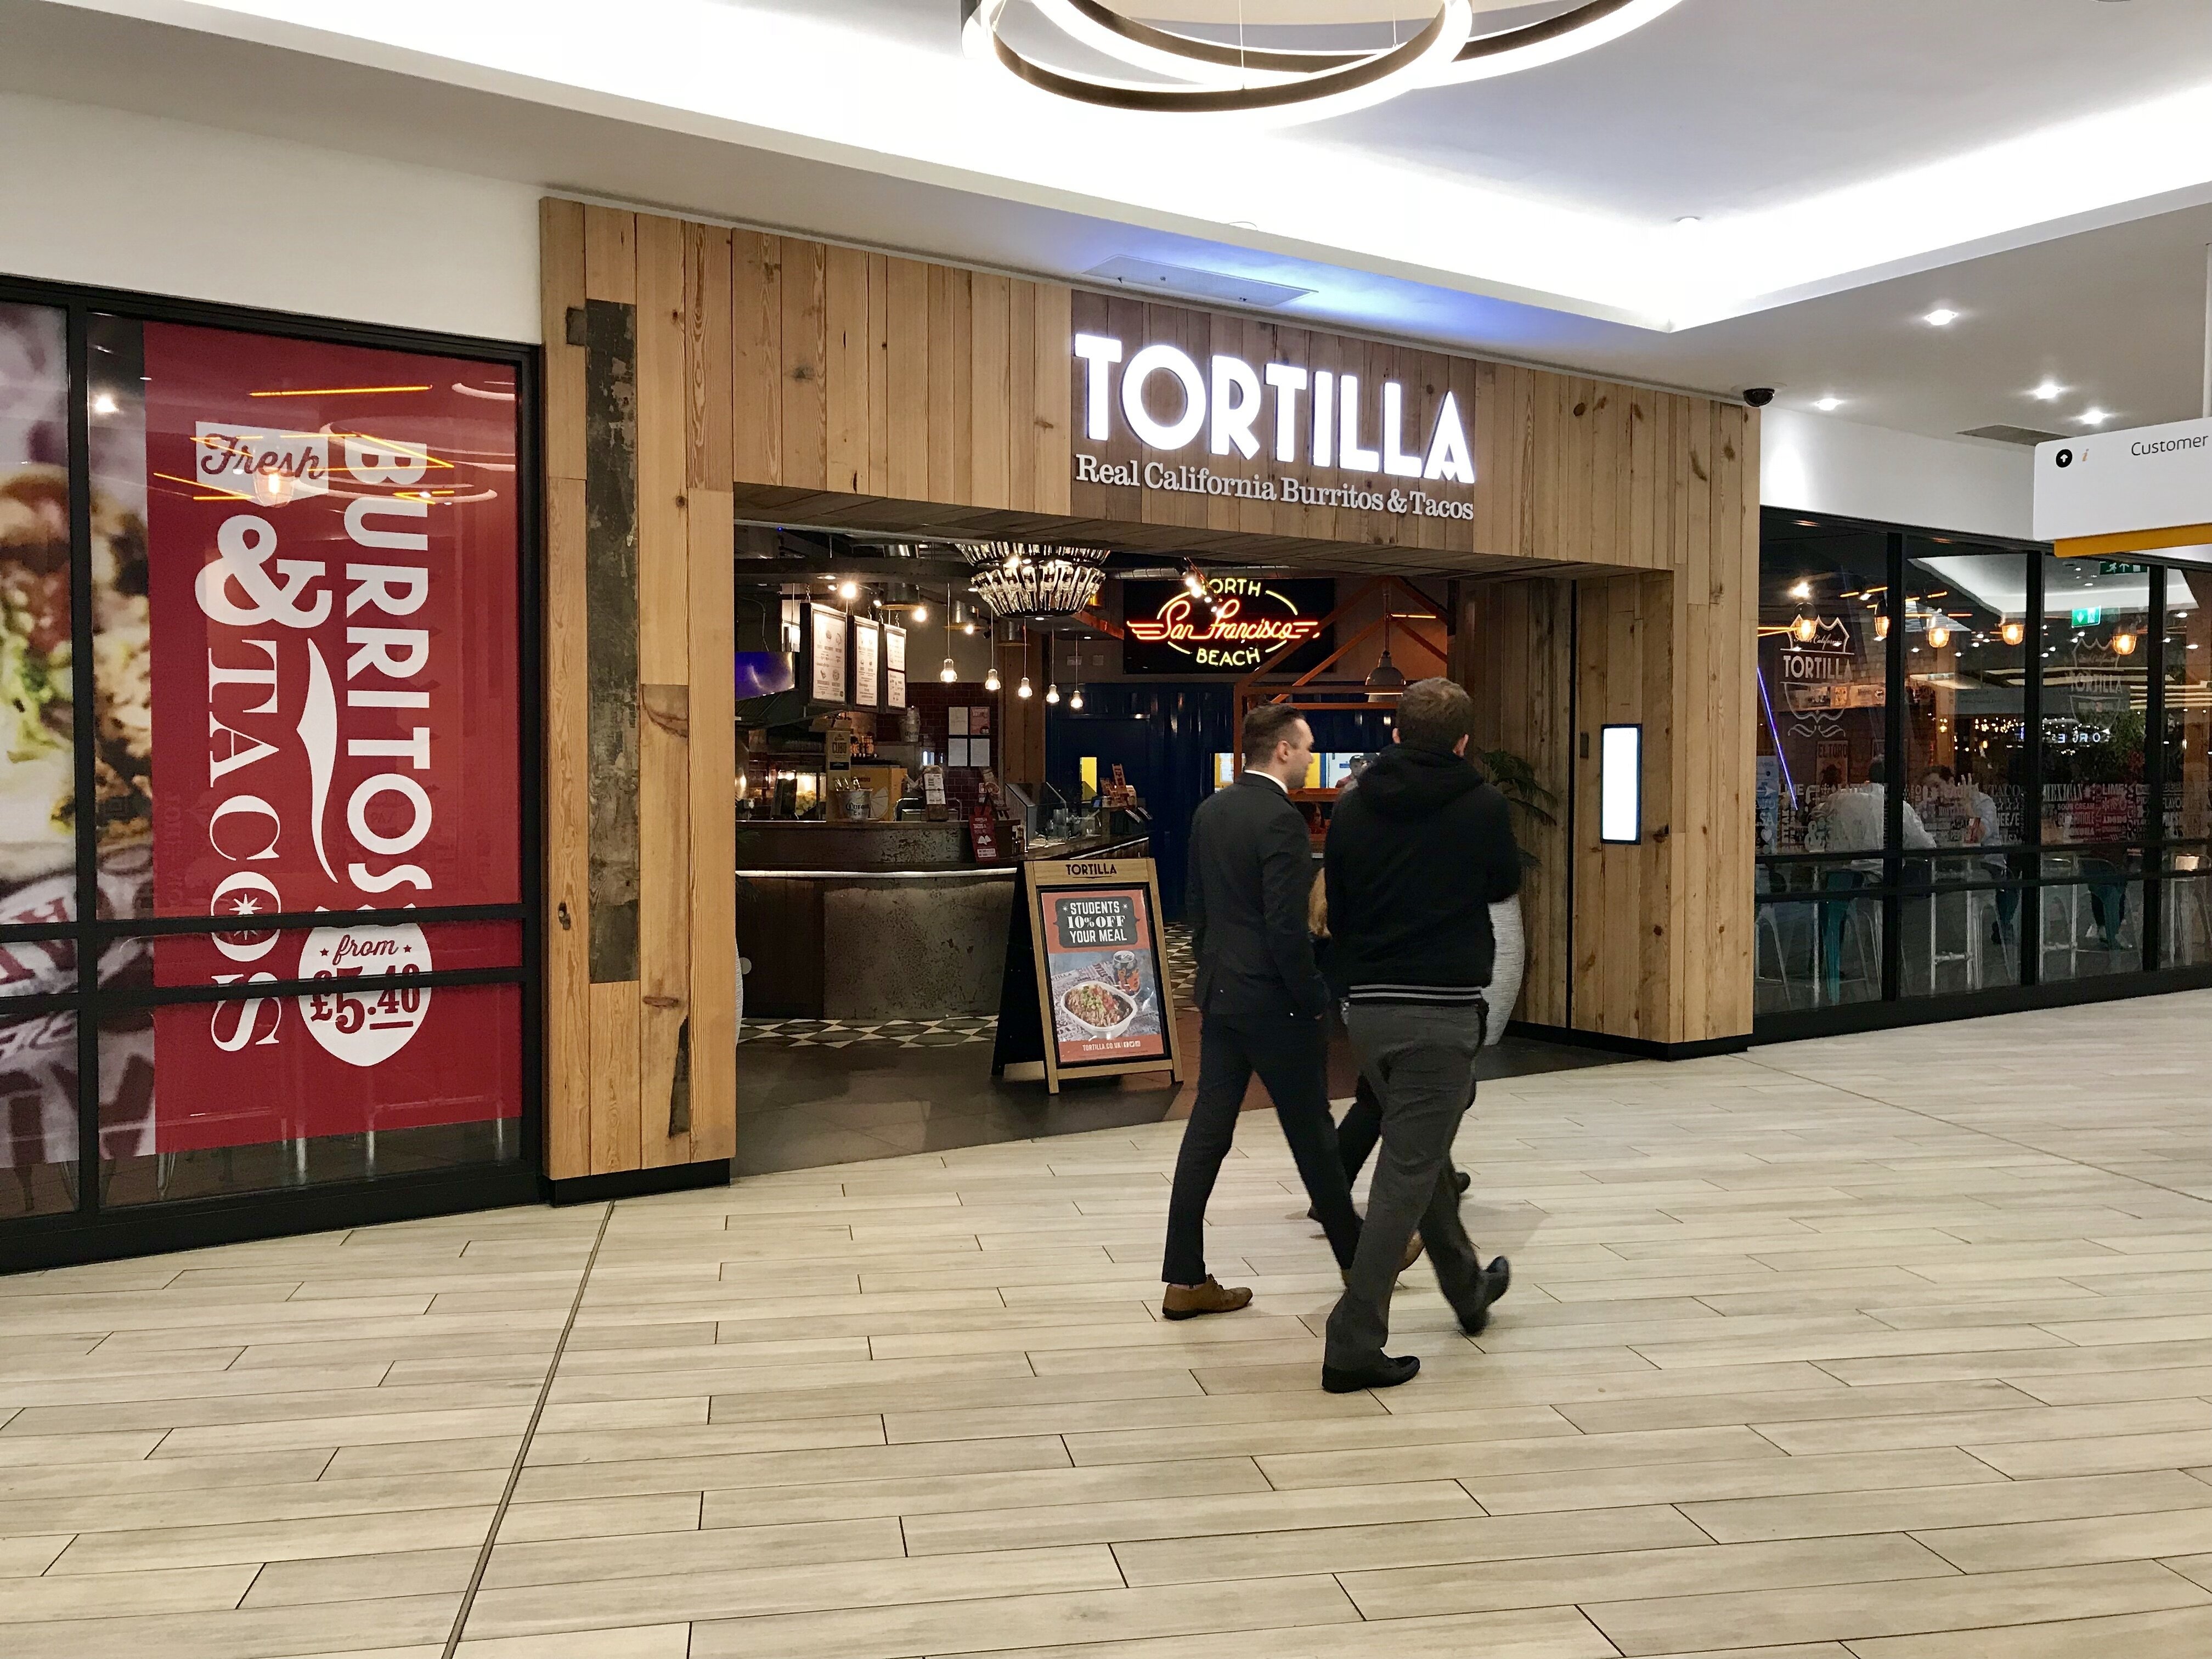 Tortilla valued at £70m ahead of stock market float